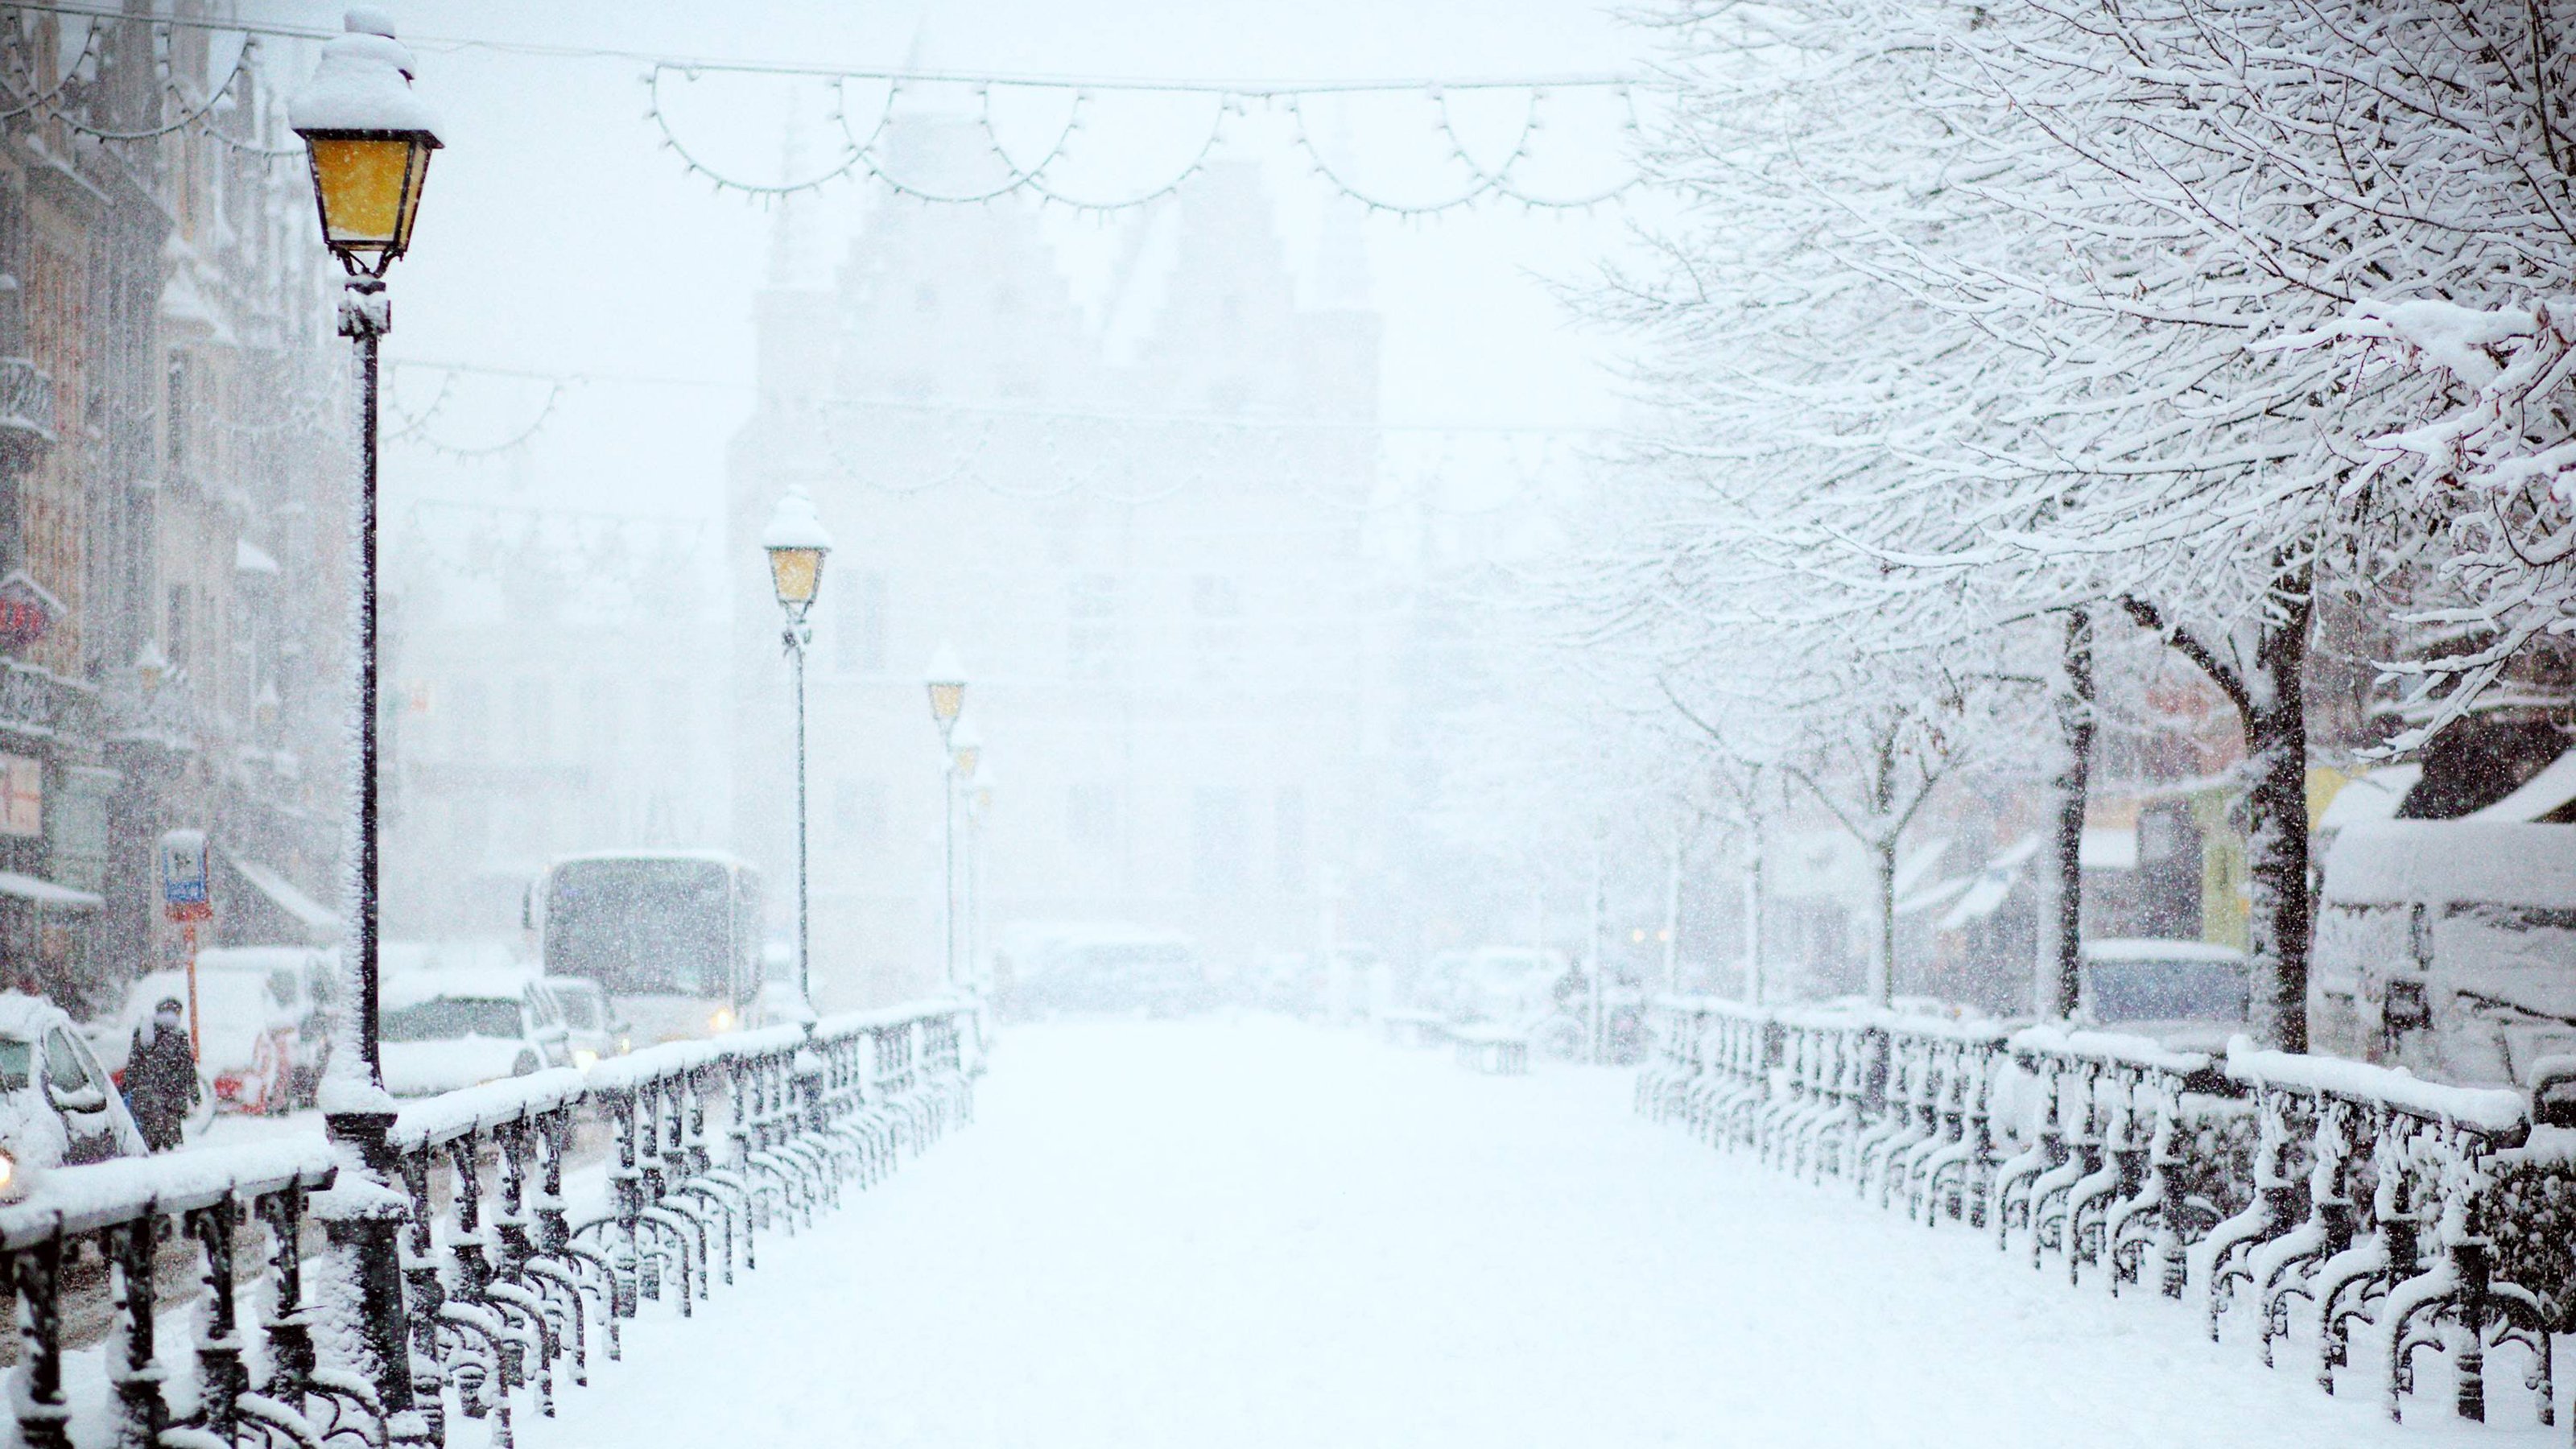 Winter Scene on Bridge by Filip Bunkens on Unsplash